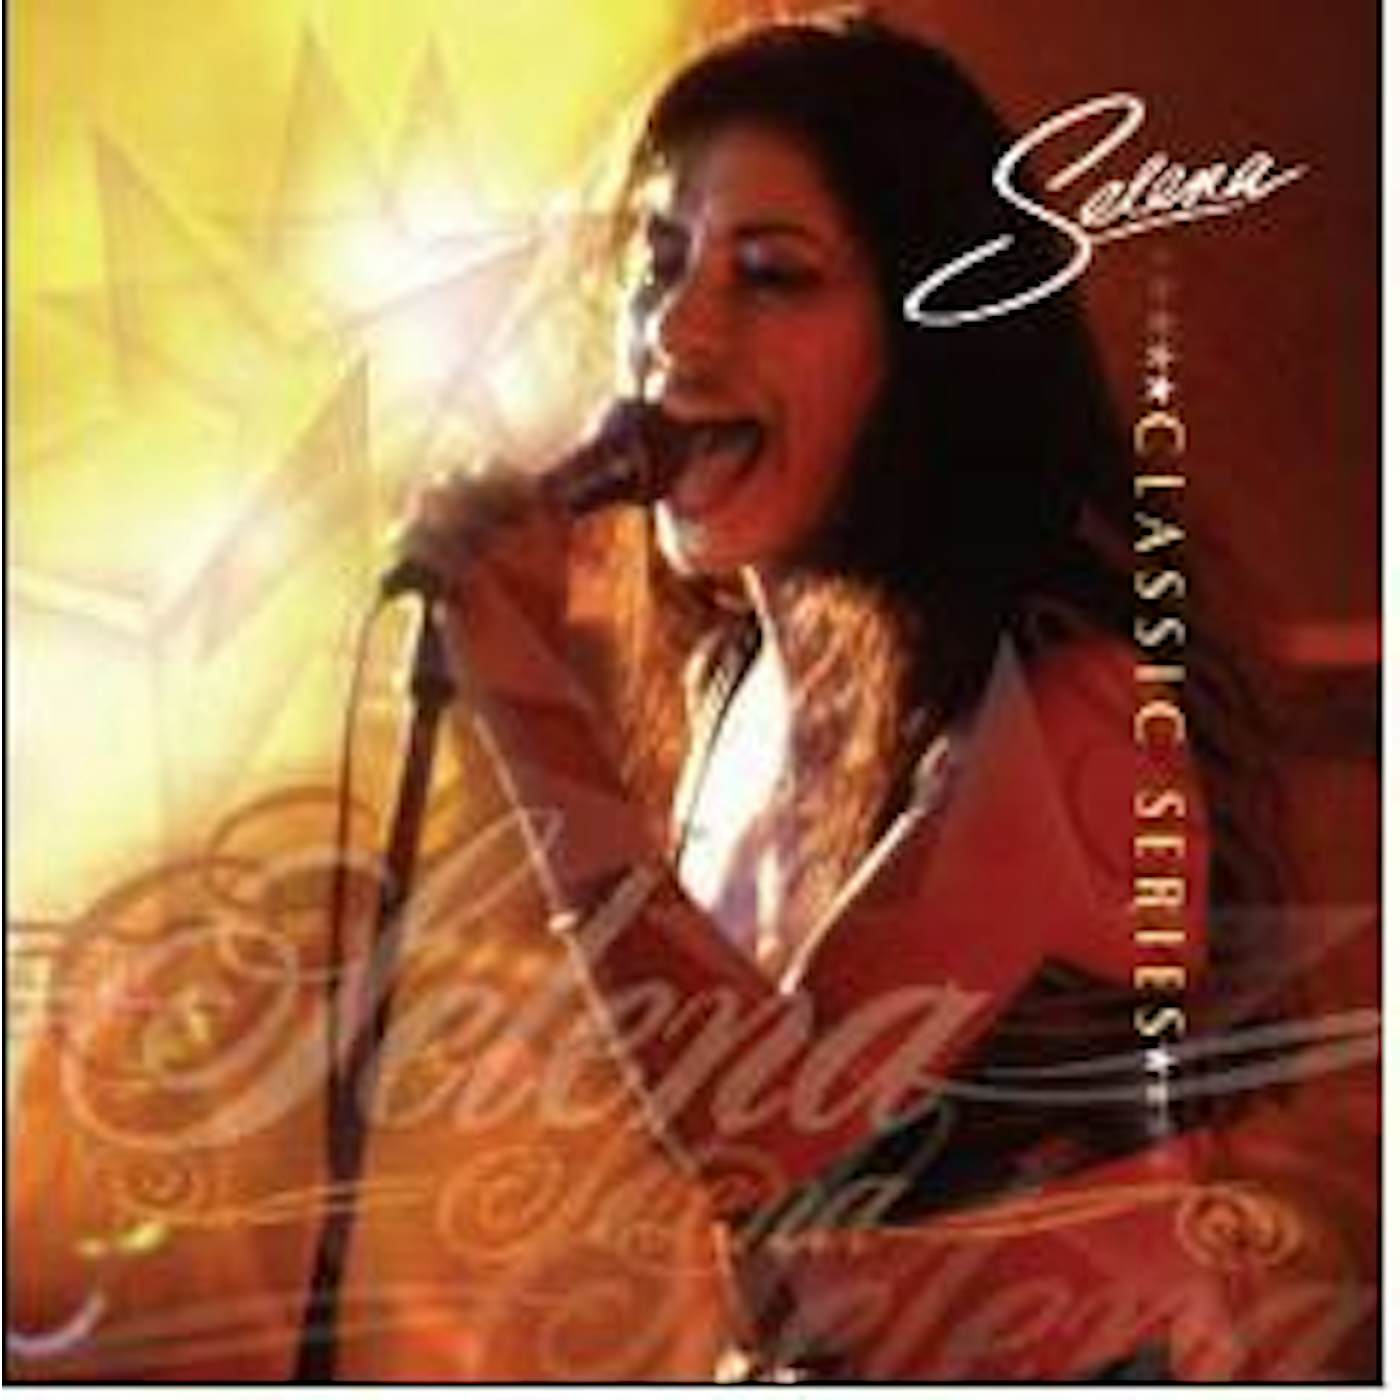 Selena CLASSIC SERIES 1 CD